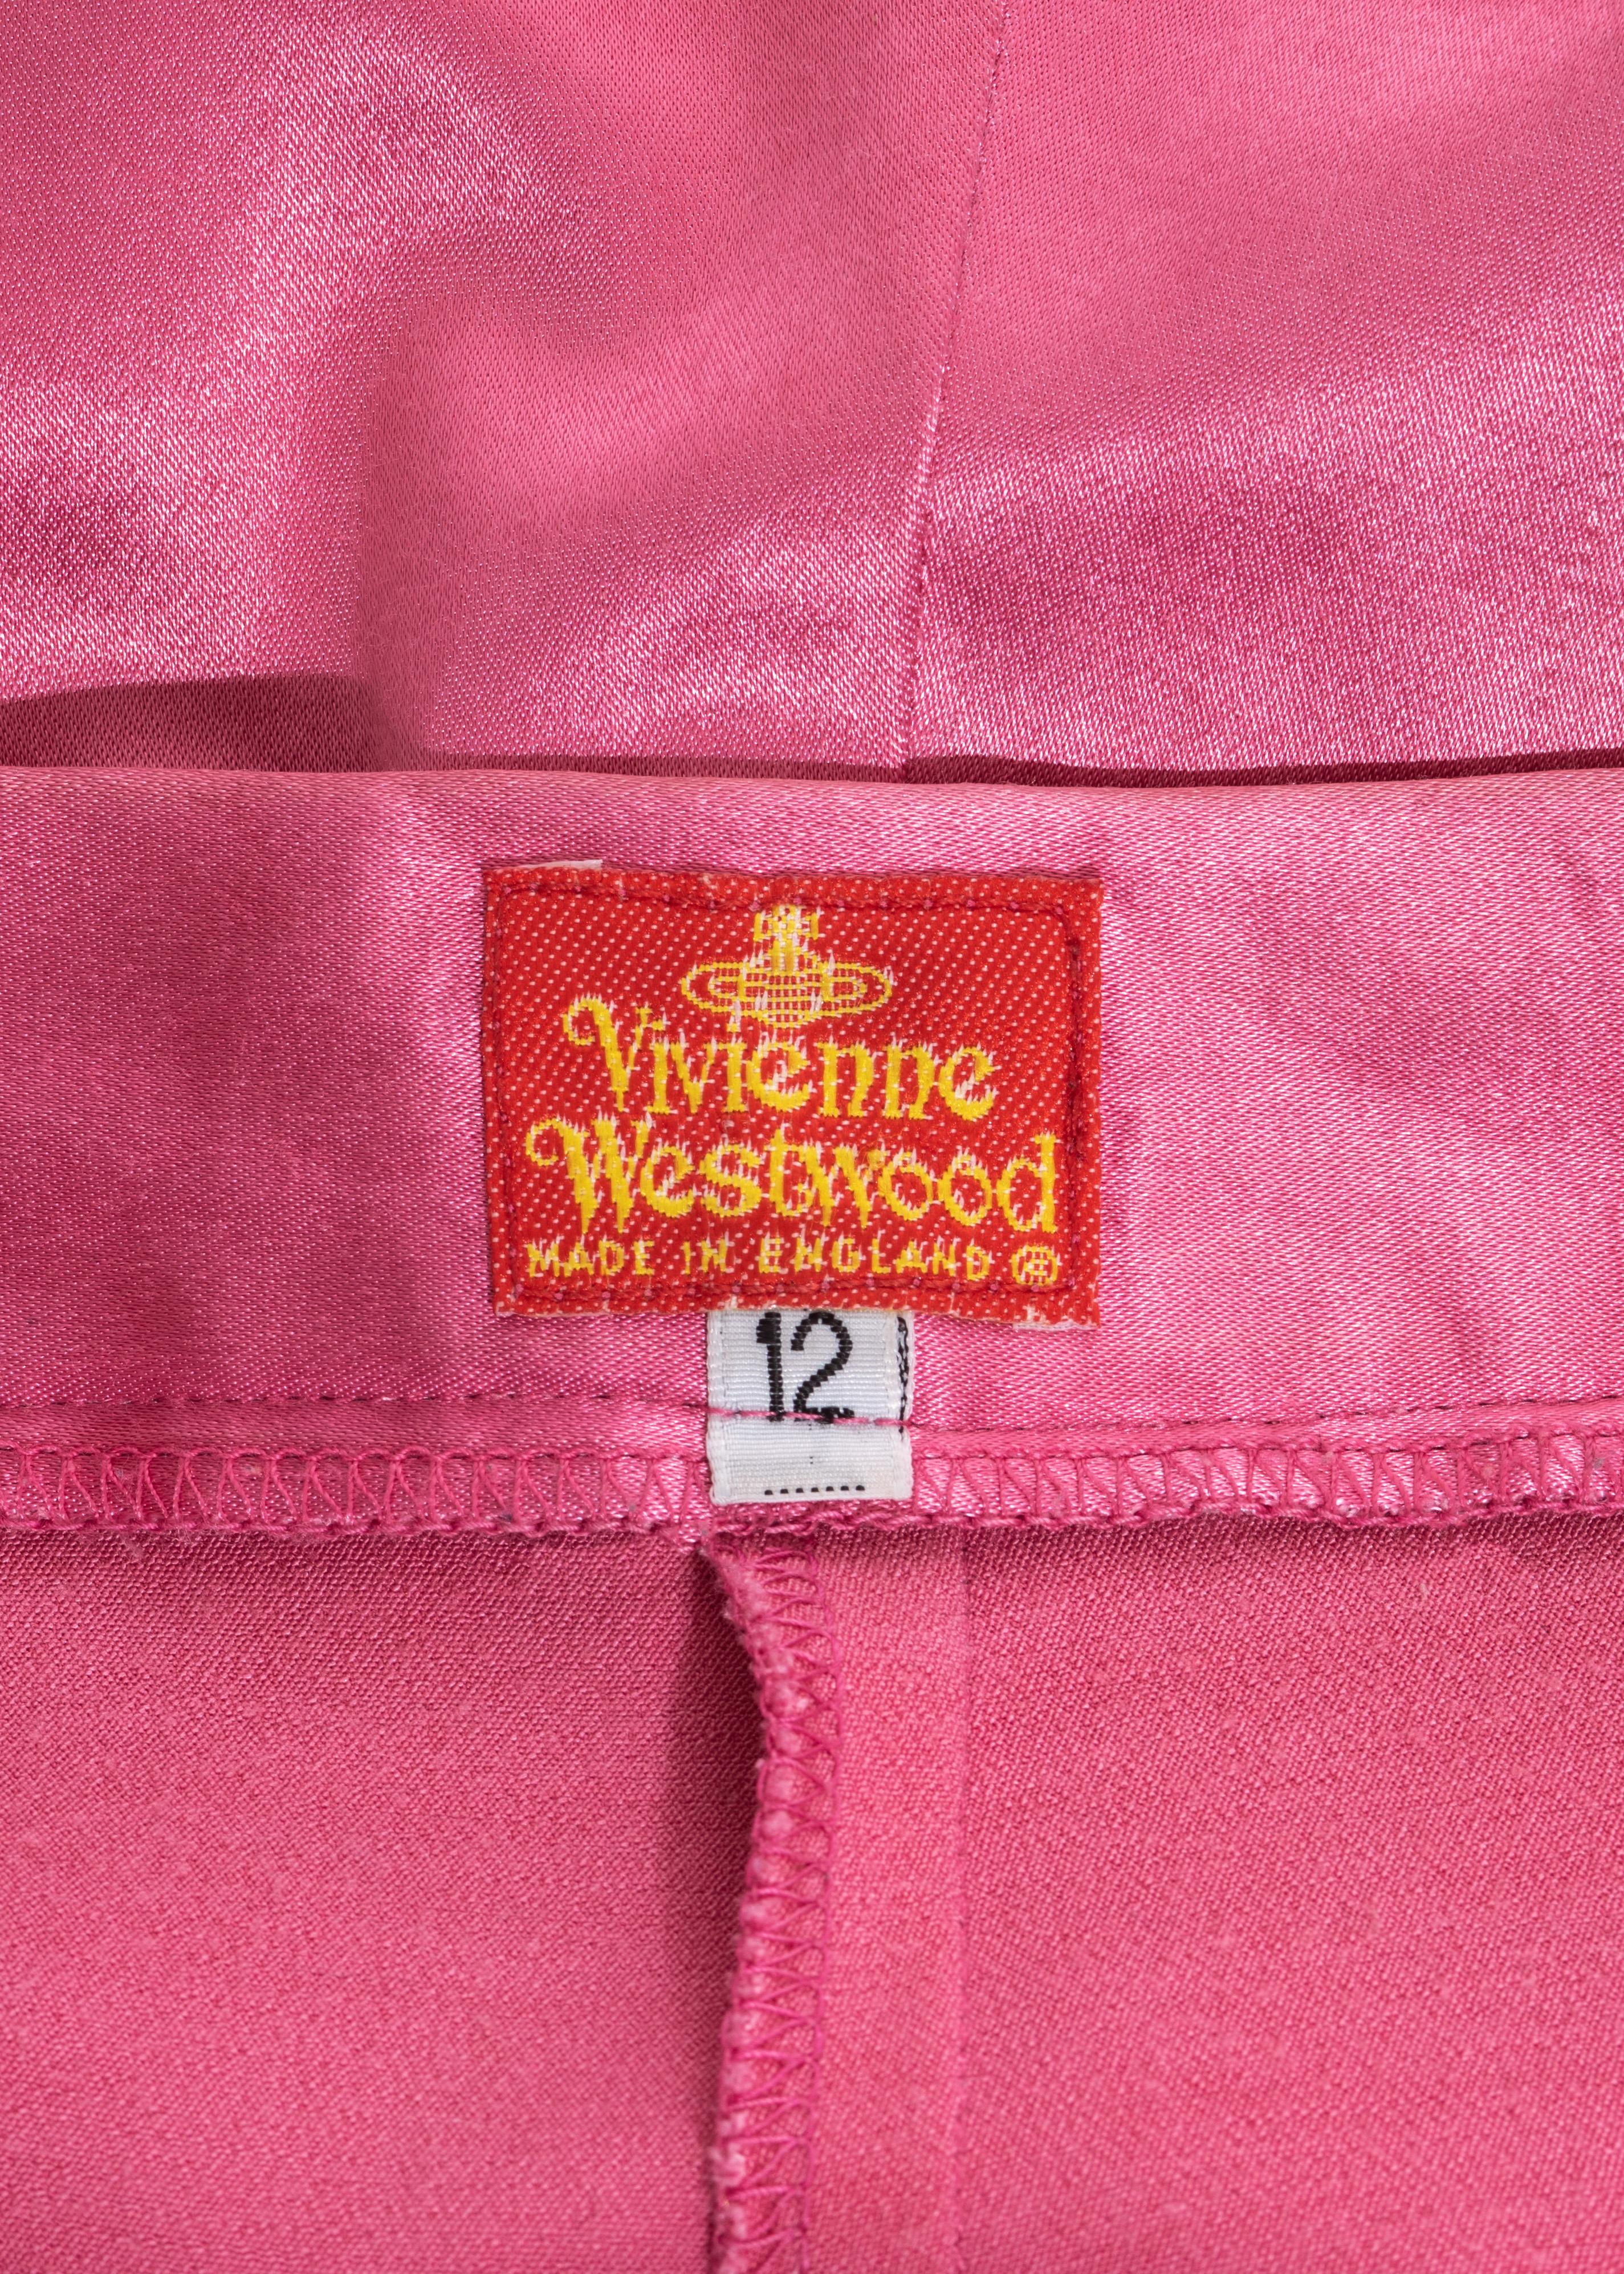 Women's Vivienne Westwood pink satin mini shorts with faux fur, fw 1991